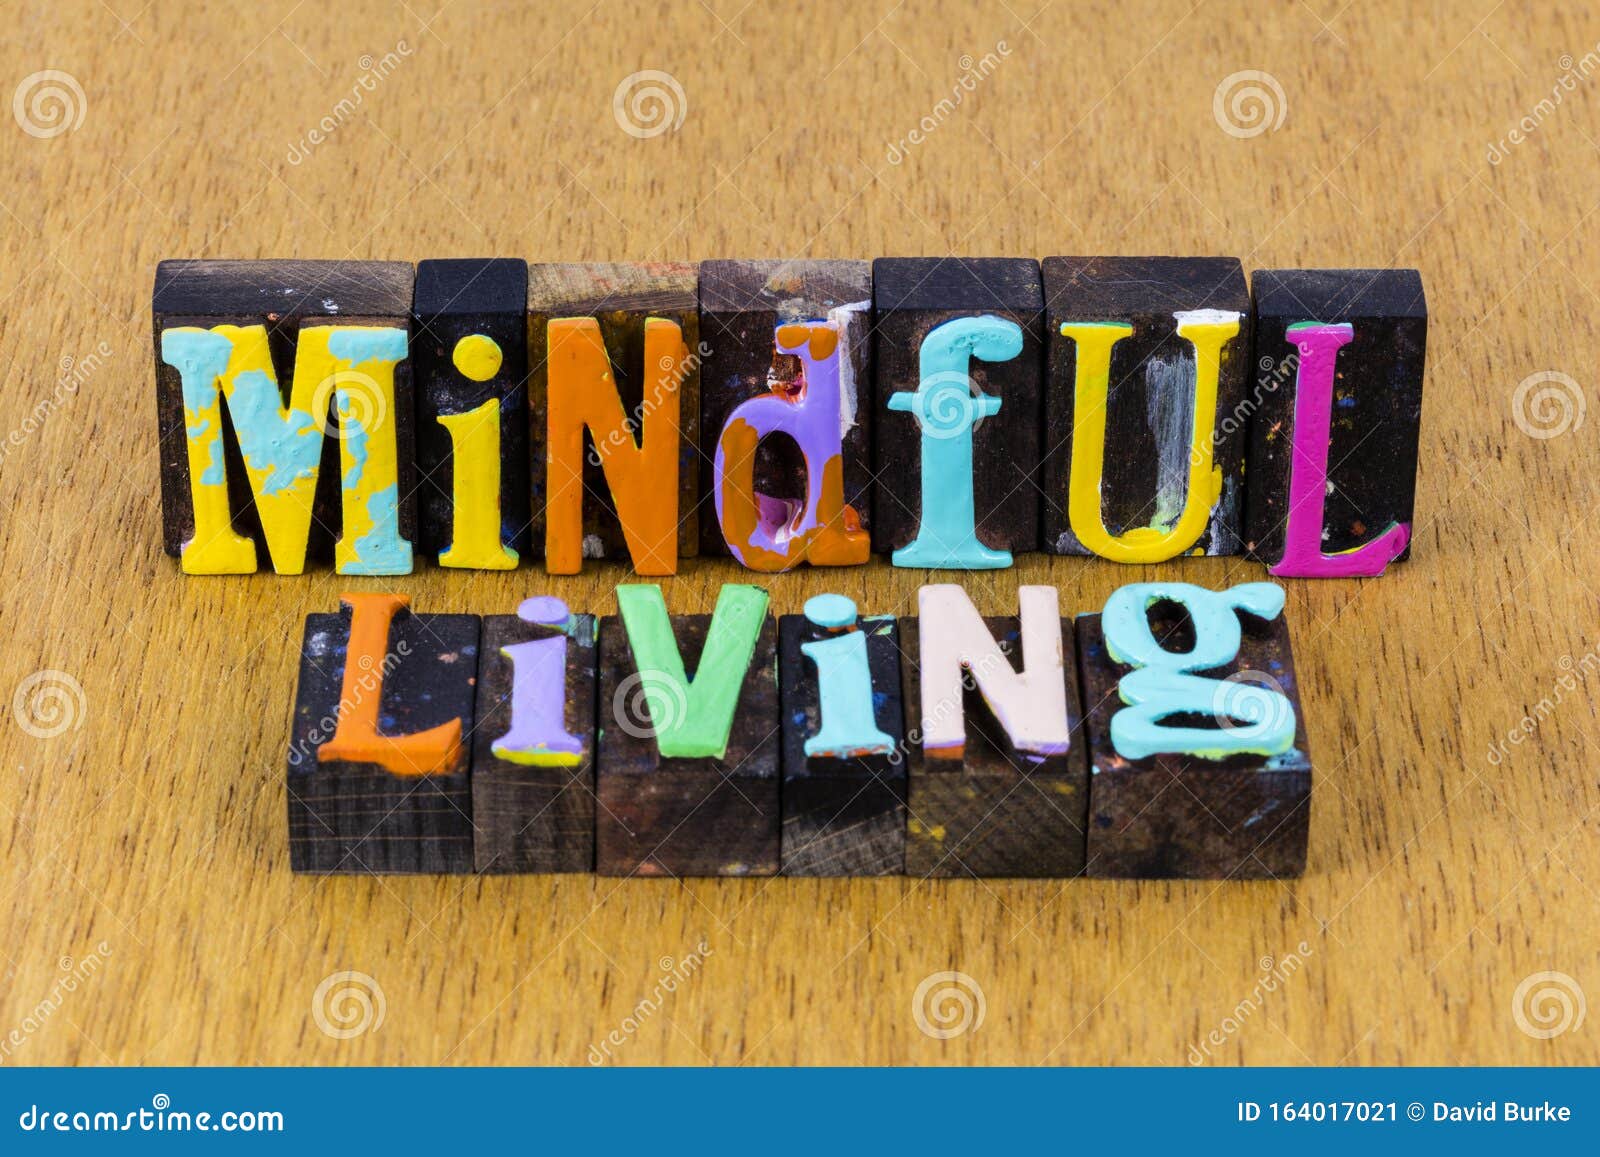 mindful living fully aware conscious sensible wellness peace